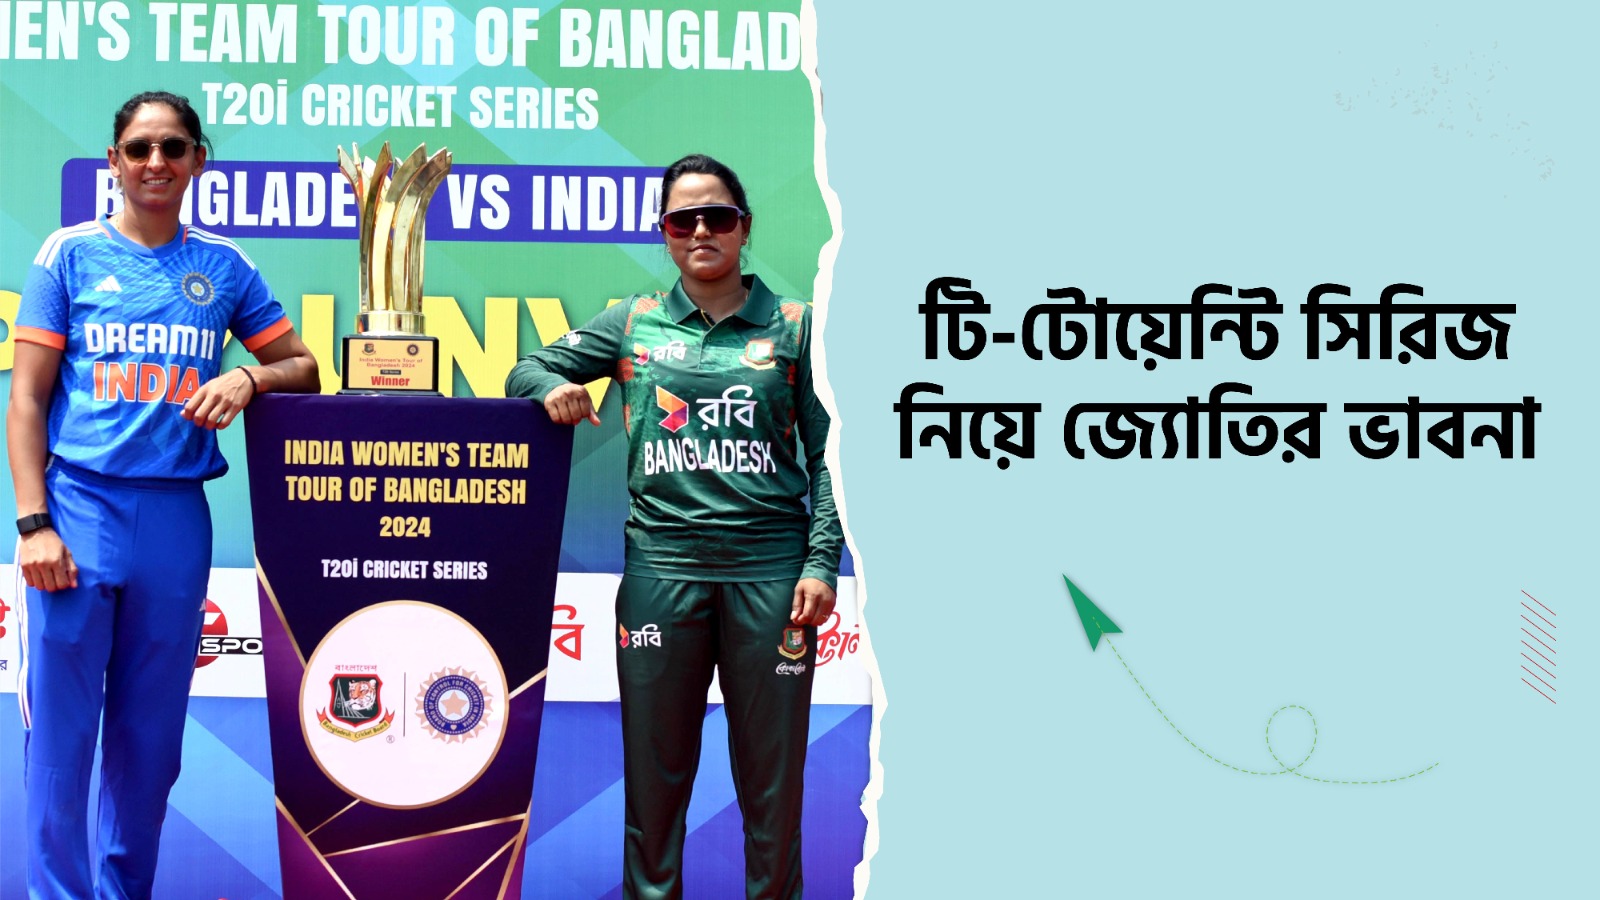 Captain Bangladesh Women’s Cricket Team Nigar Sultana Joty reflects on the 5-match T20i series